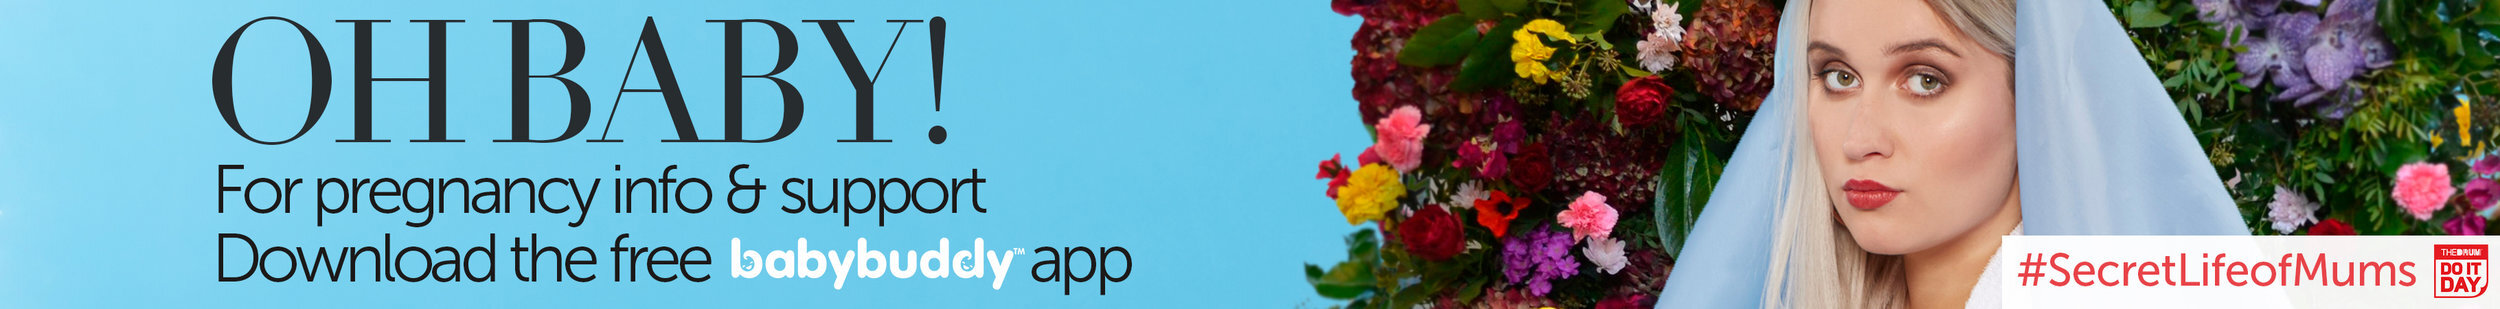 Michael+Hilbrown+Florist+-+Best+Beginings+Campaign+-+Banner.jpg